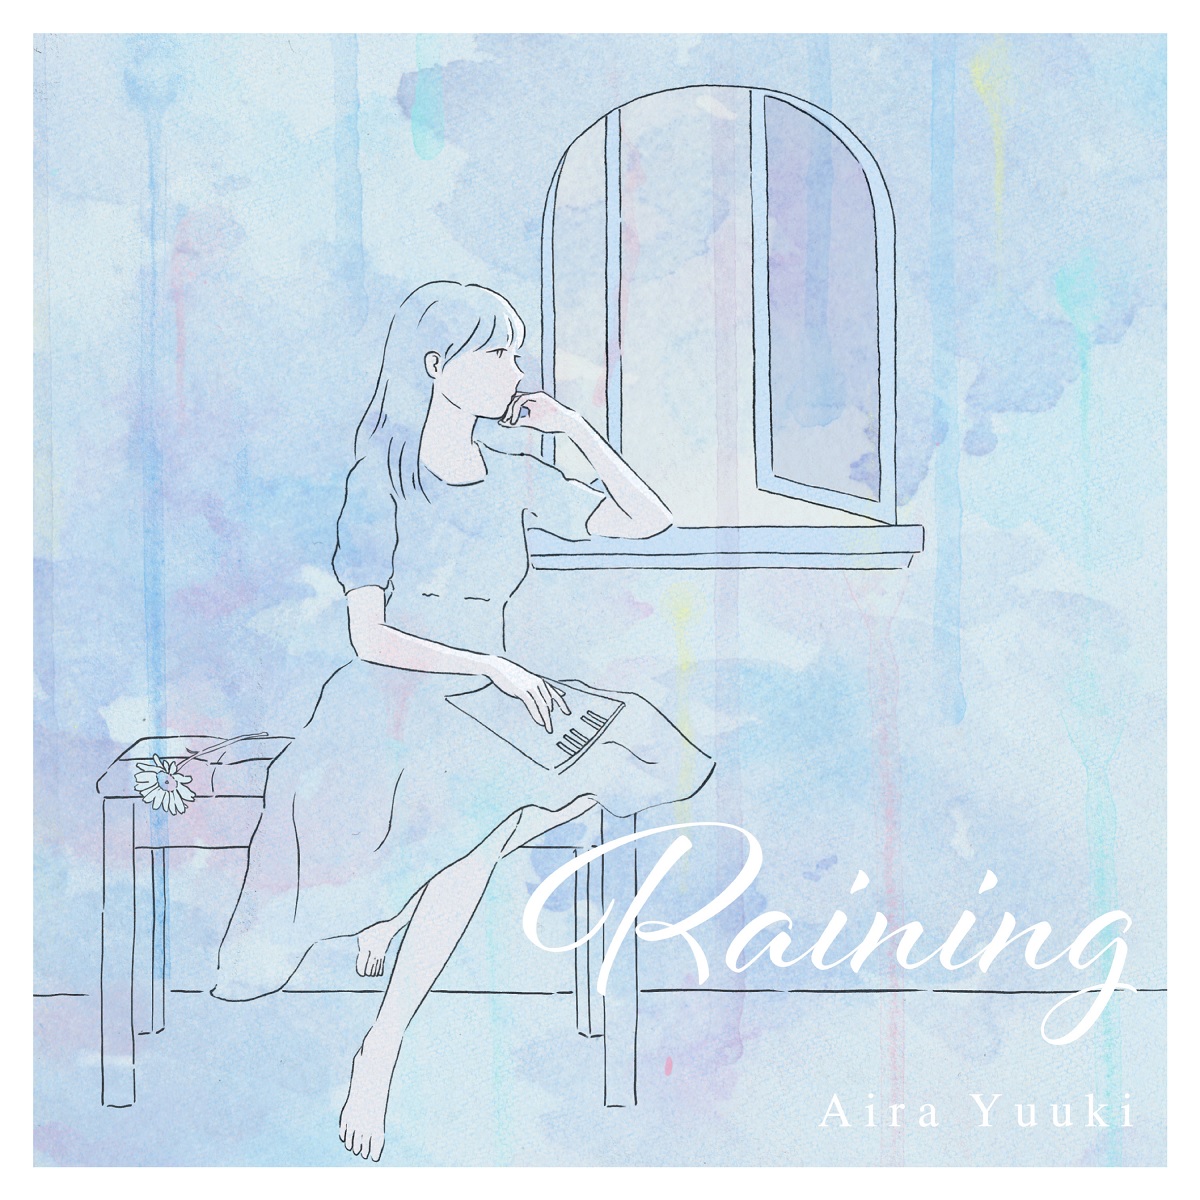 Cover art for『Aira Yuuki - Raining』from the release『Raining』